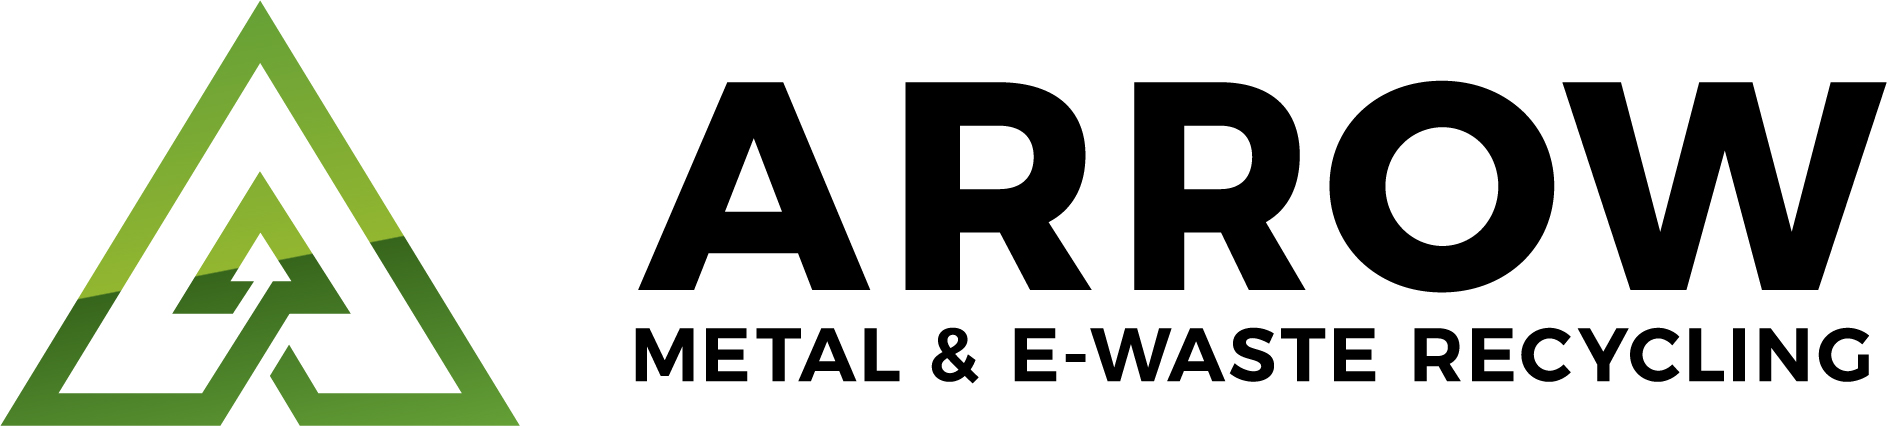 Arrow Metal & E-Waste Recycling